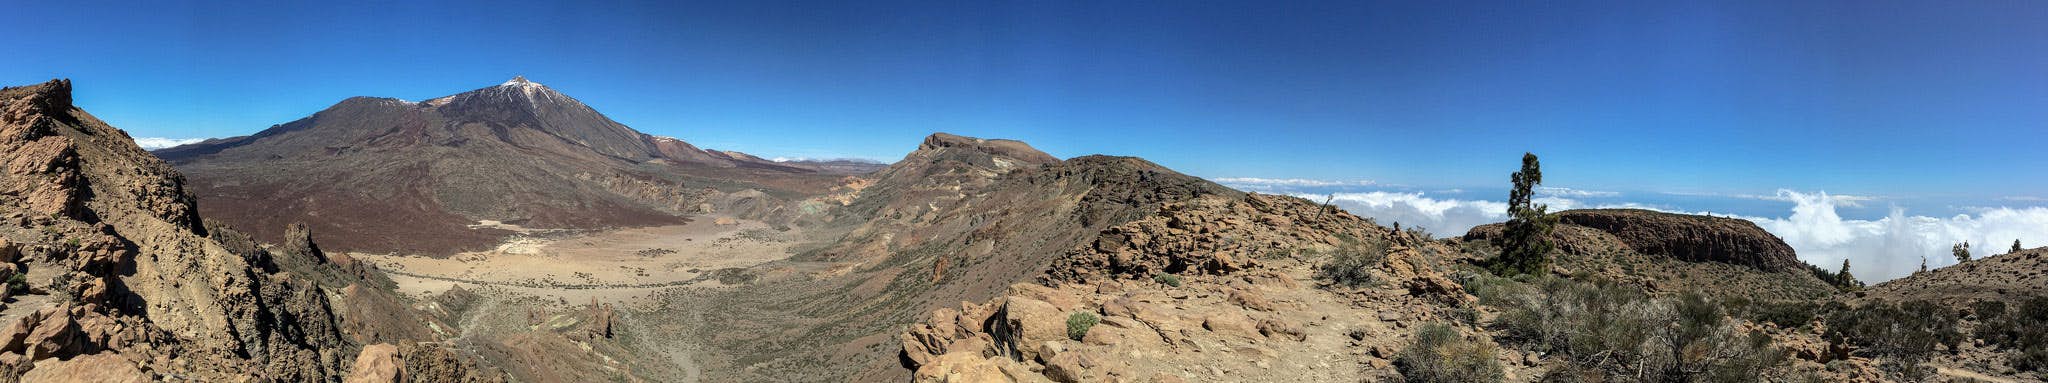 Teide with Pico Viejo and Caldera